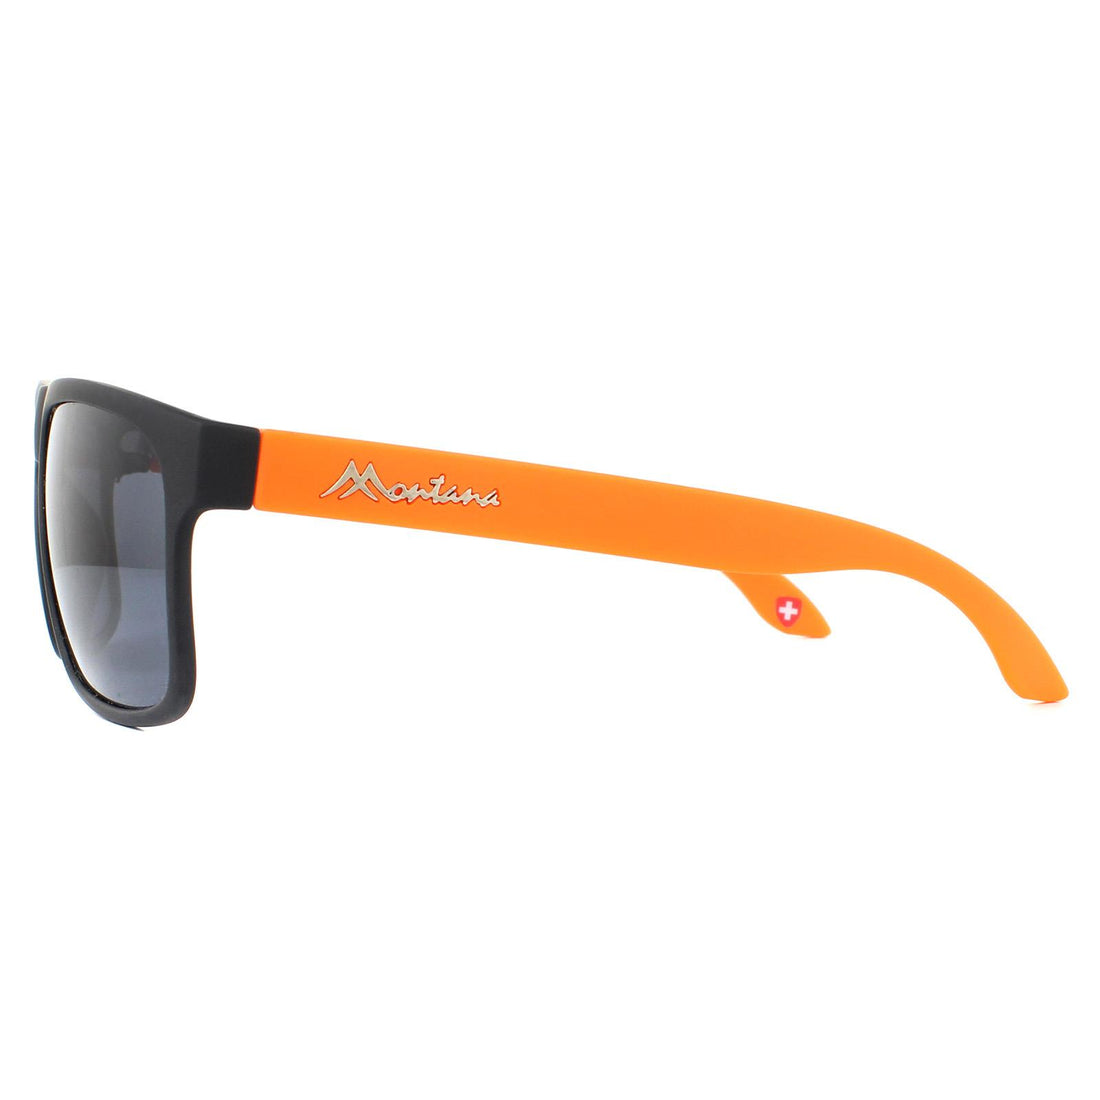 Montana Sunglasses MP37 D Black with Orange Rubbertouch Black Polarized